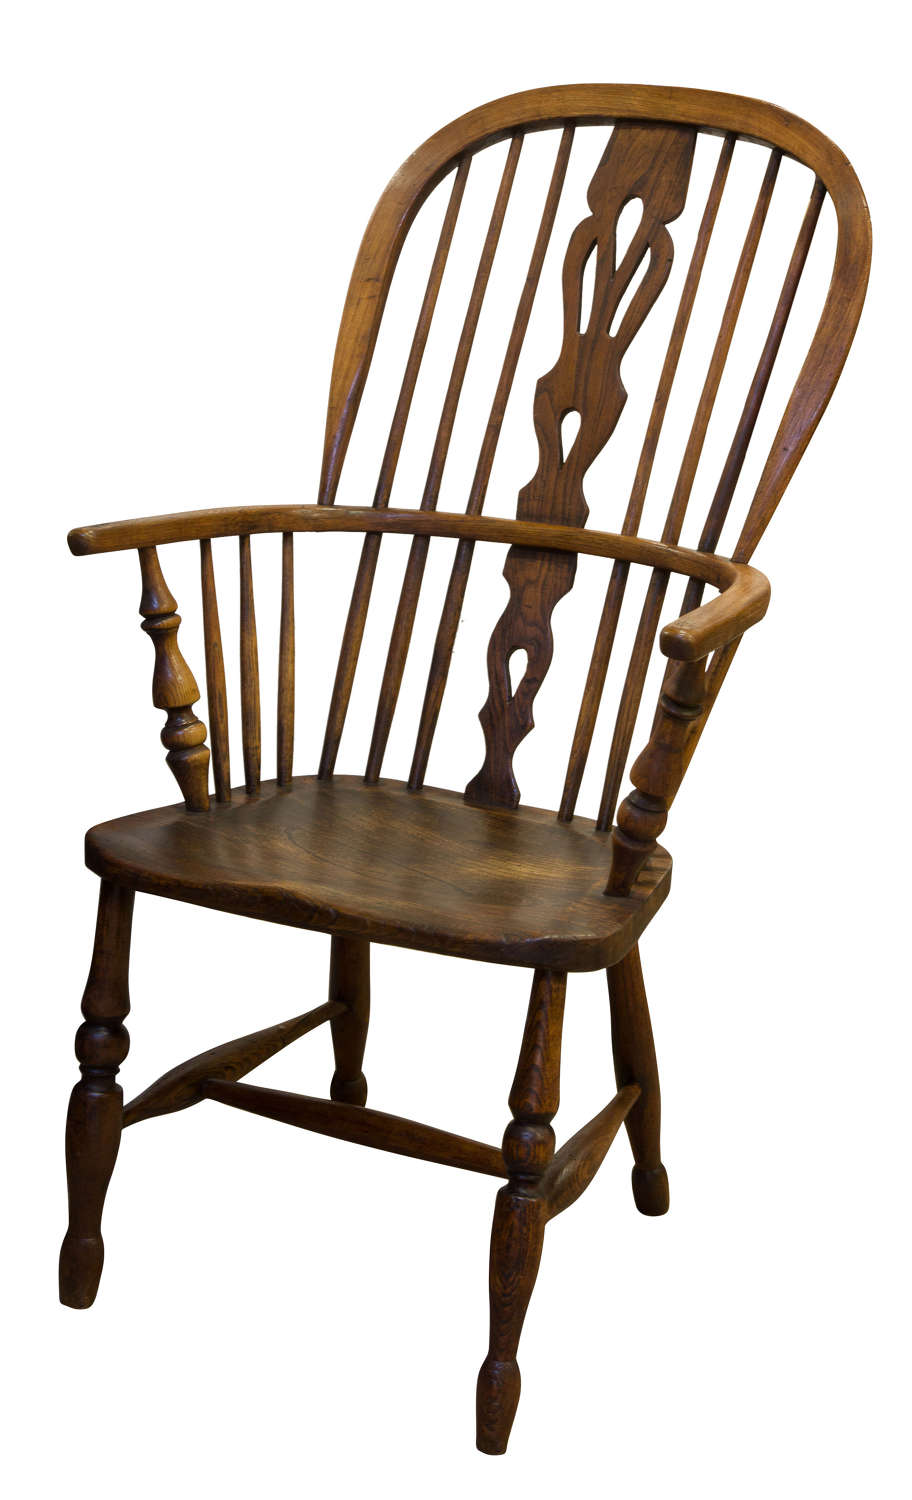 An Ash and Elm Hoop back Windsor Chair